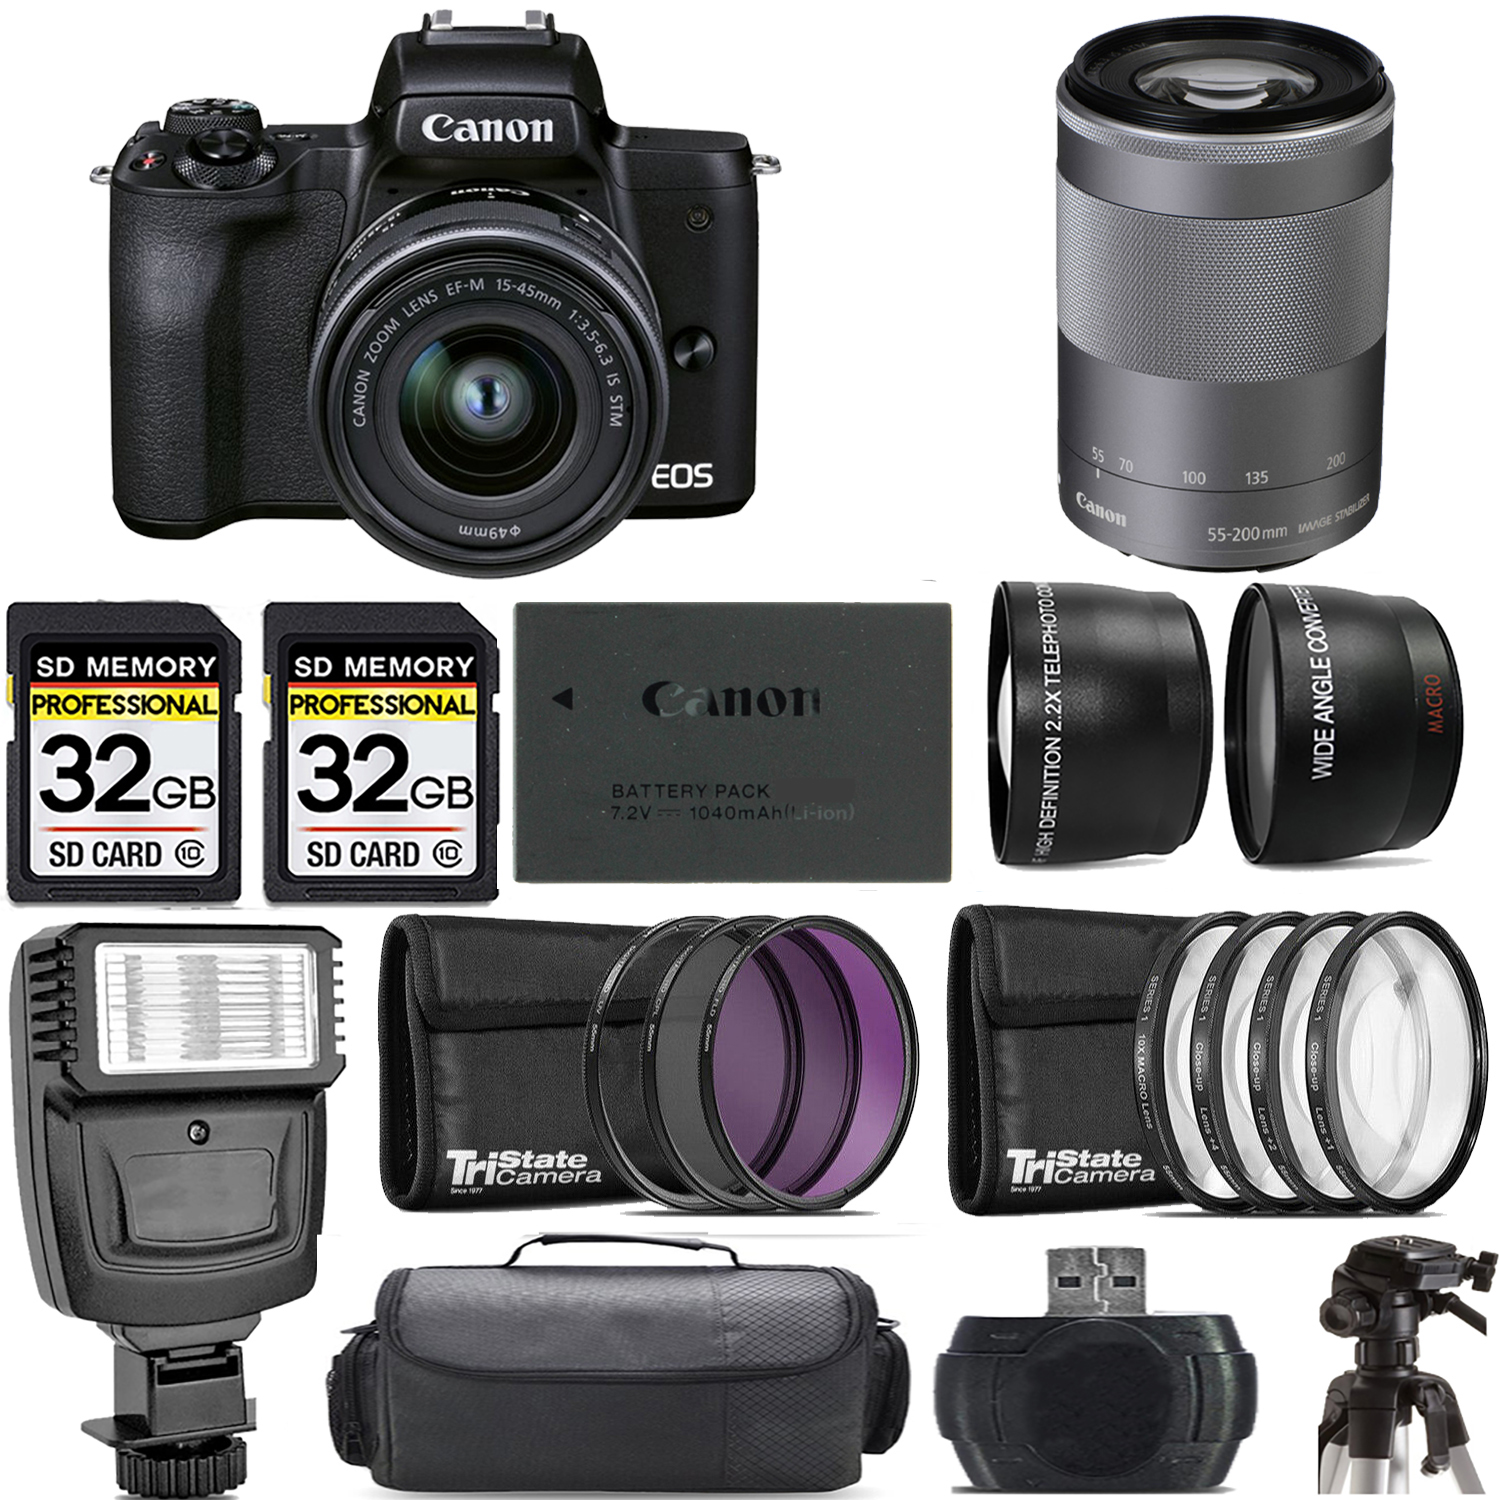 M50 II + 15-45mm Lens (Black) + 55-200mm IS Lens (Silver) + Flash - Kit *FREE SHIPPING*